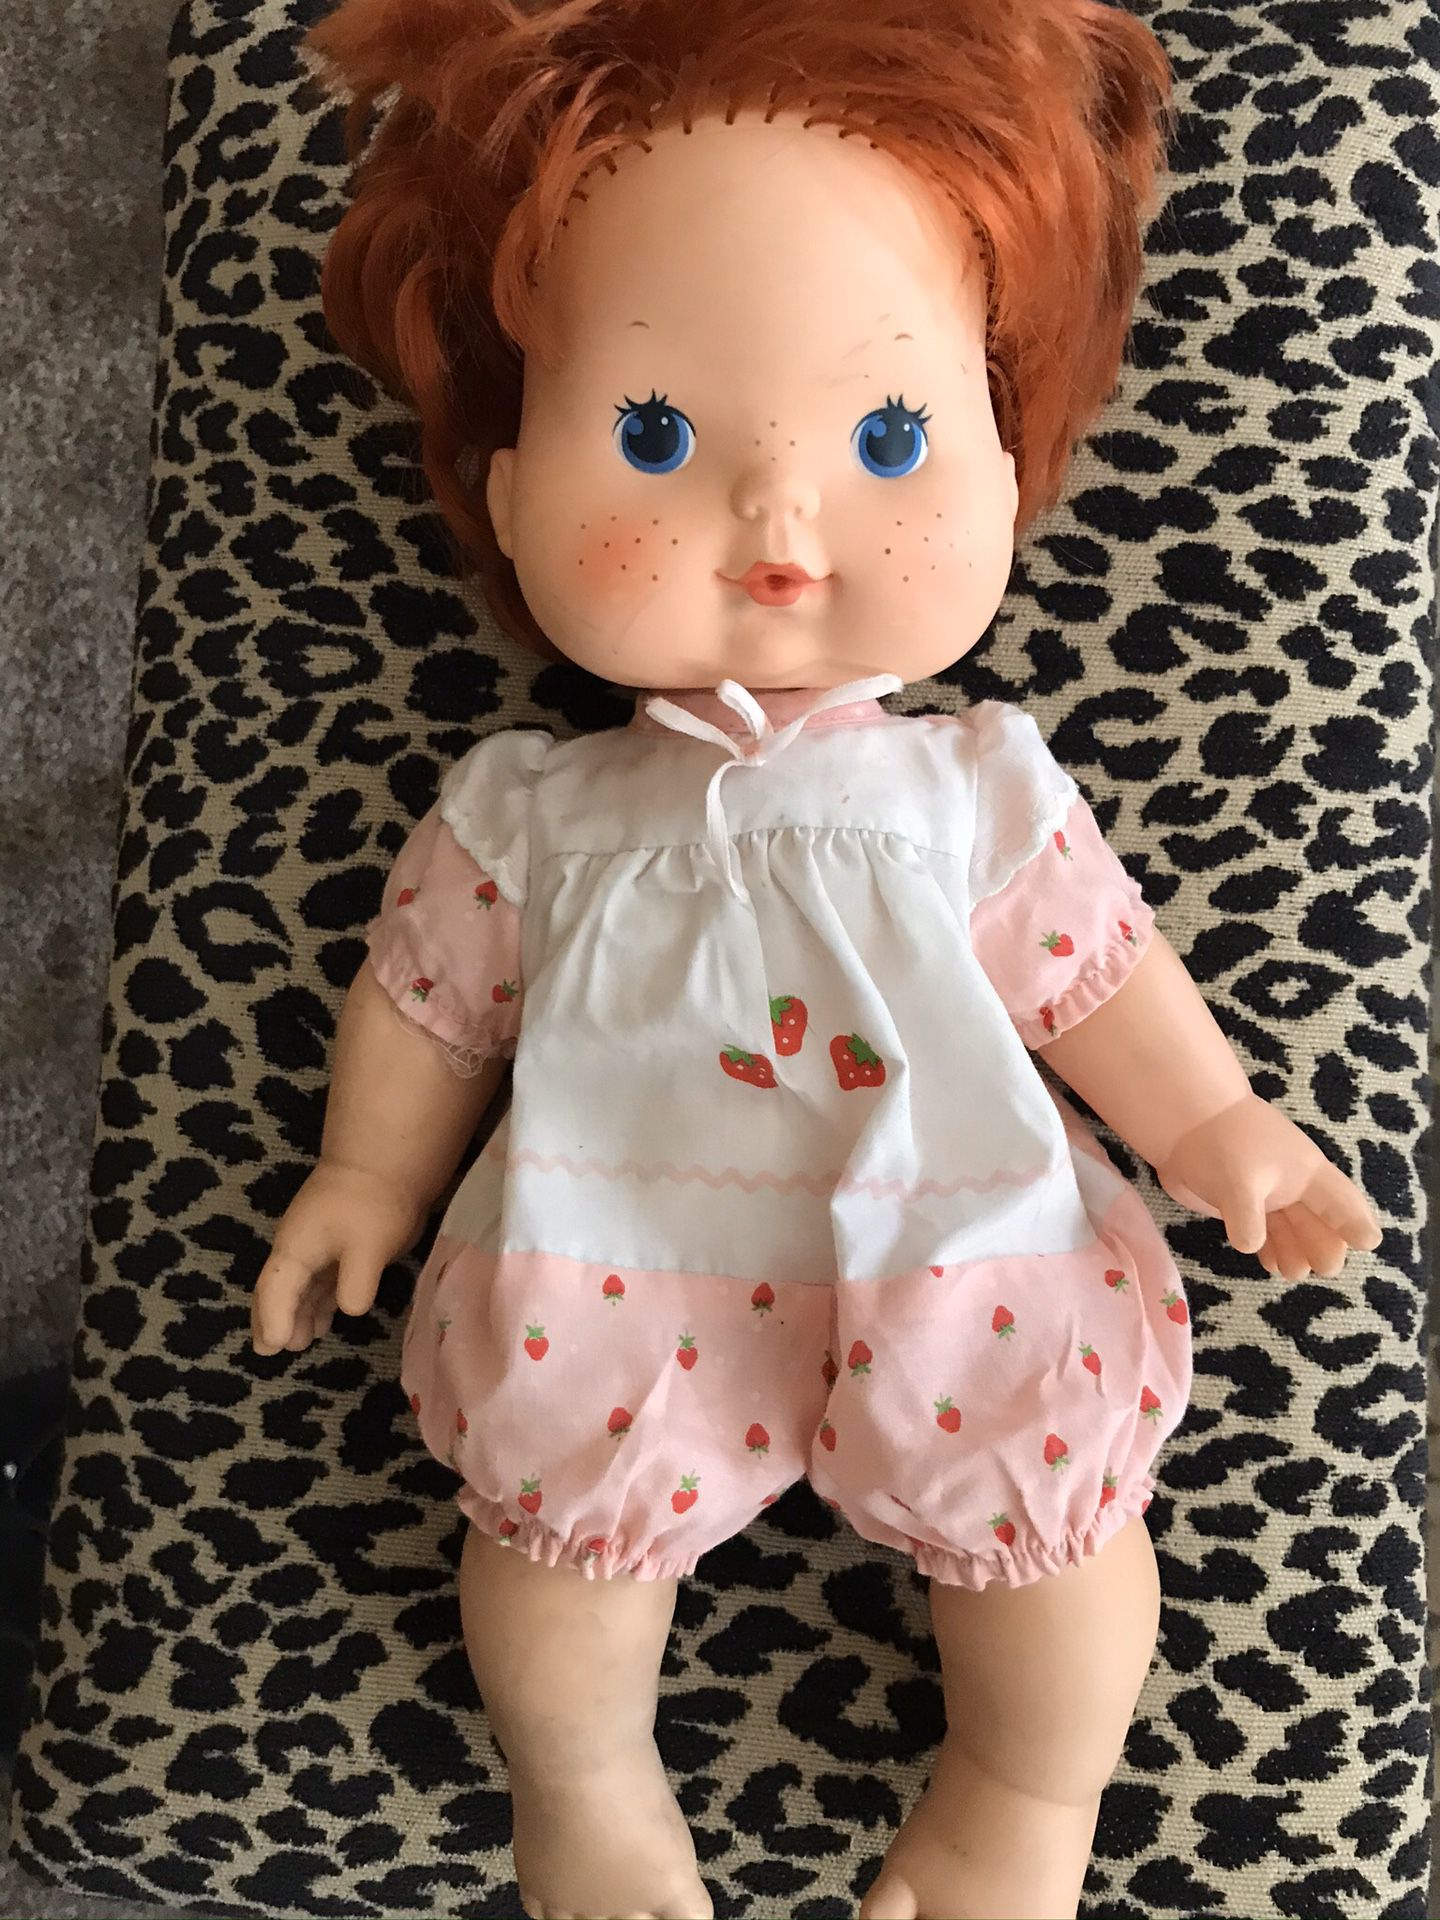 Vintage strawberry shortcake baby doll from 1980